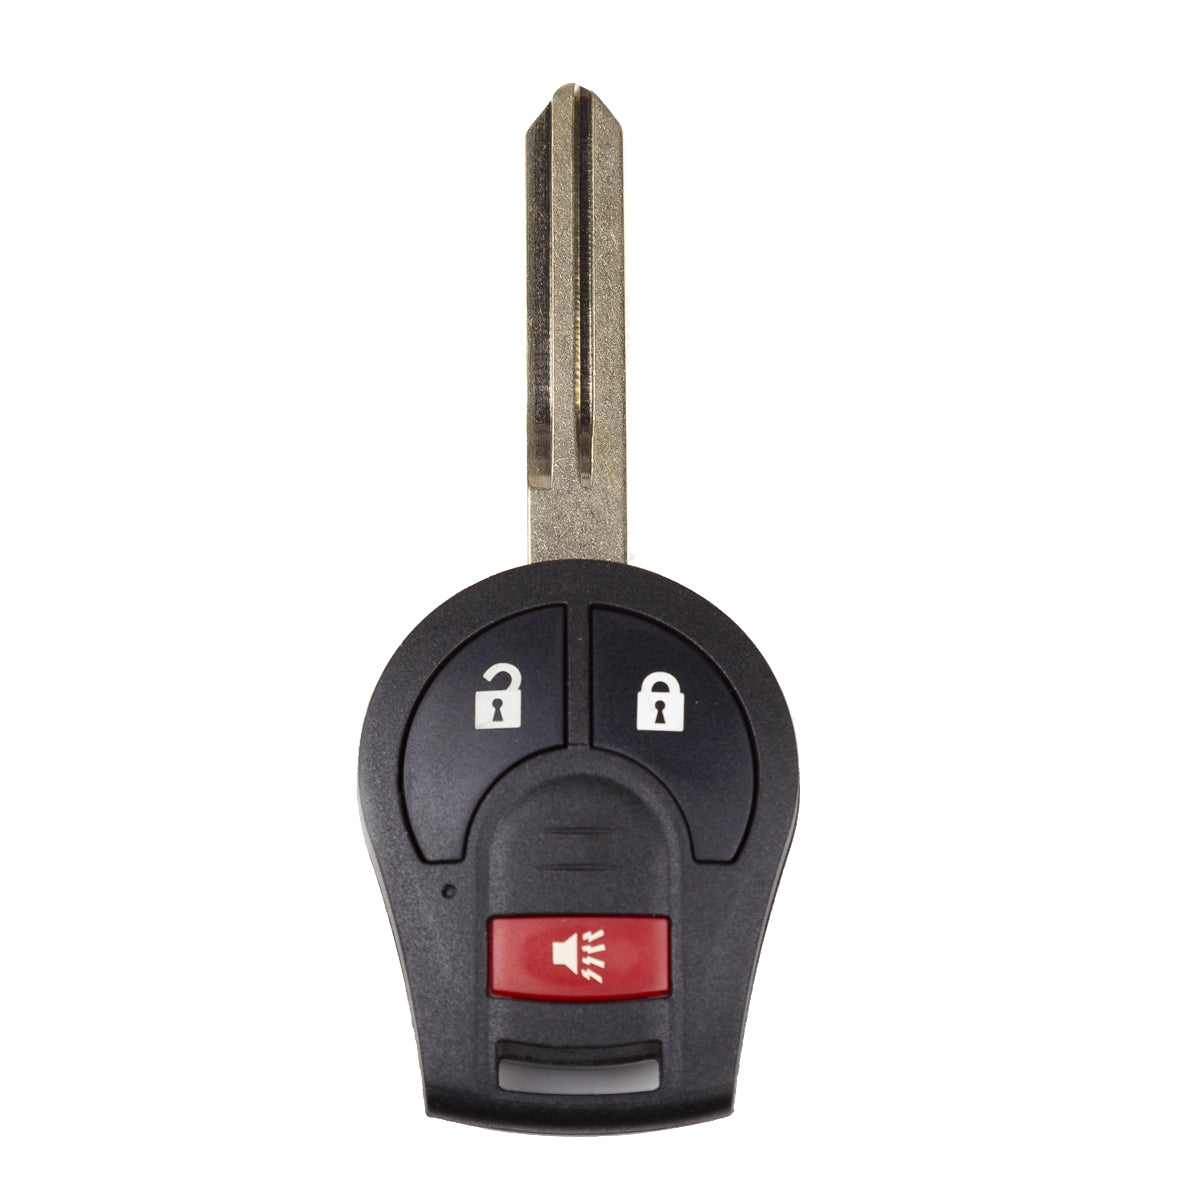 2011 Nissan Pathfinder Key Fob Replacement - Aftermarket - FCC# CWTWB1U751